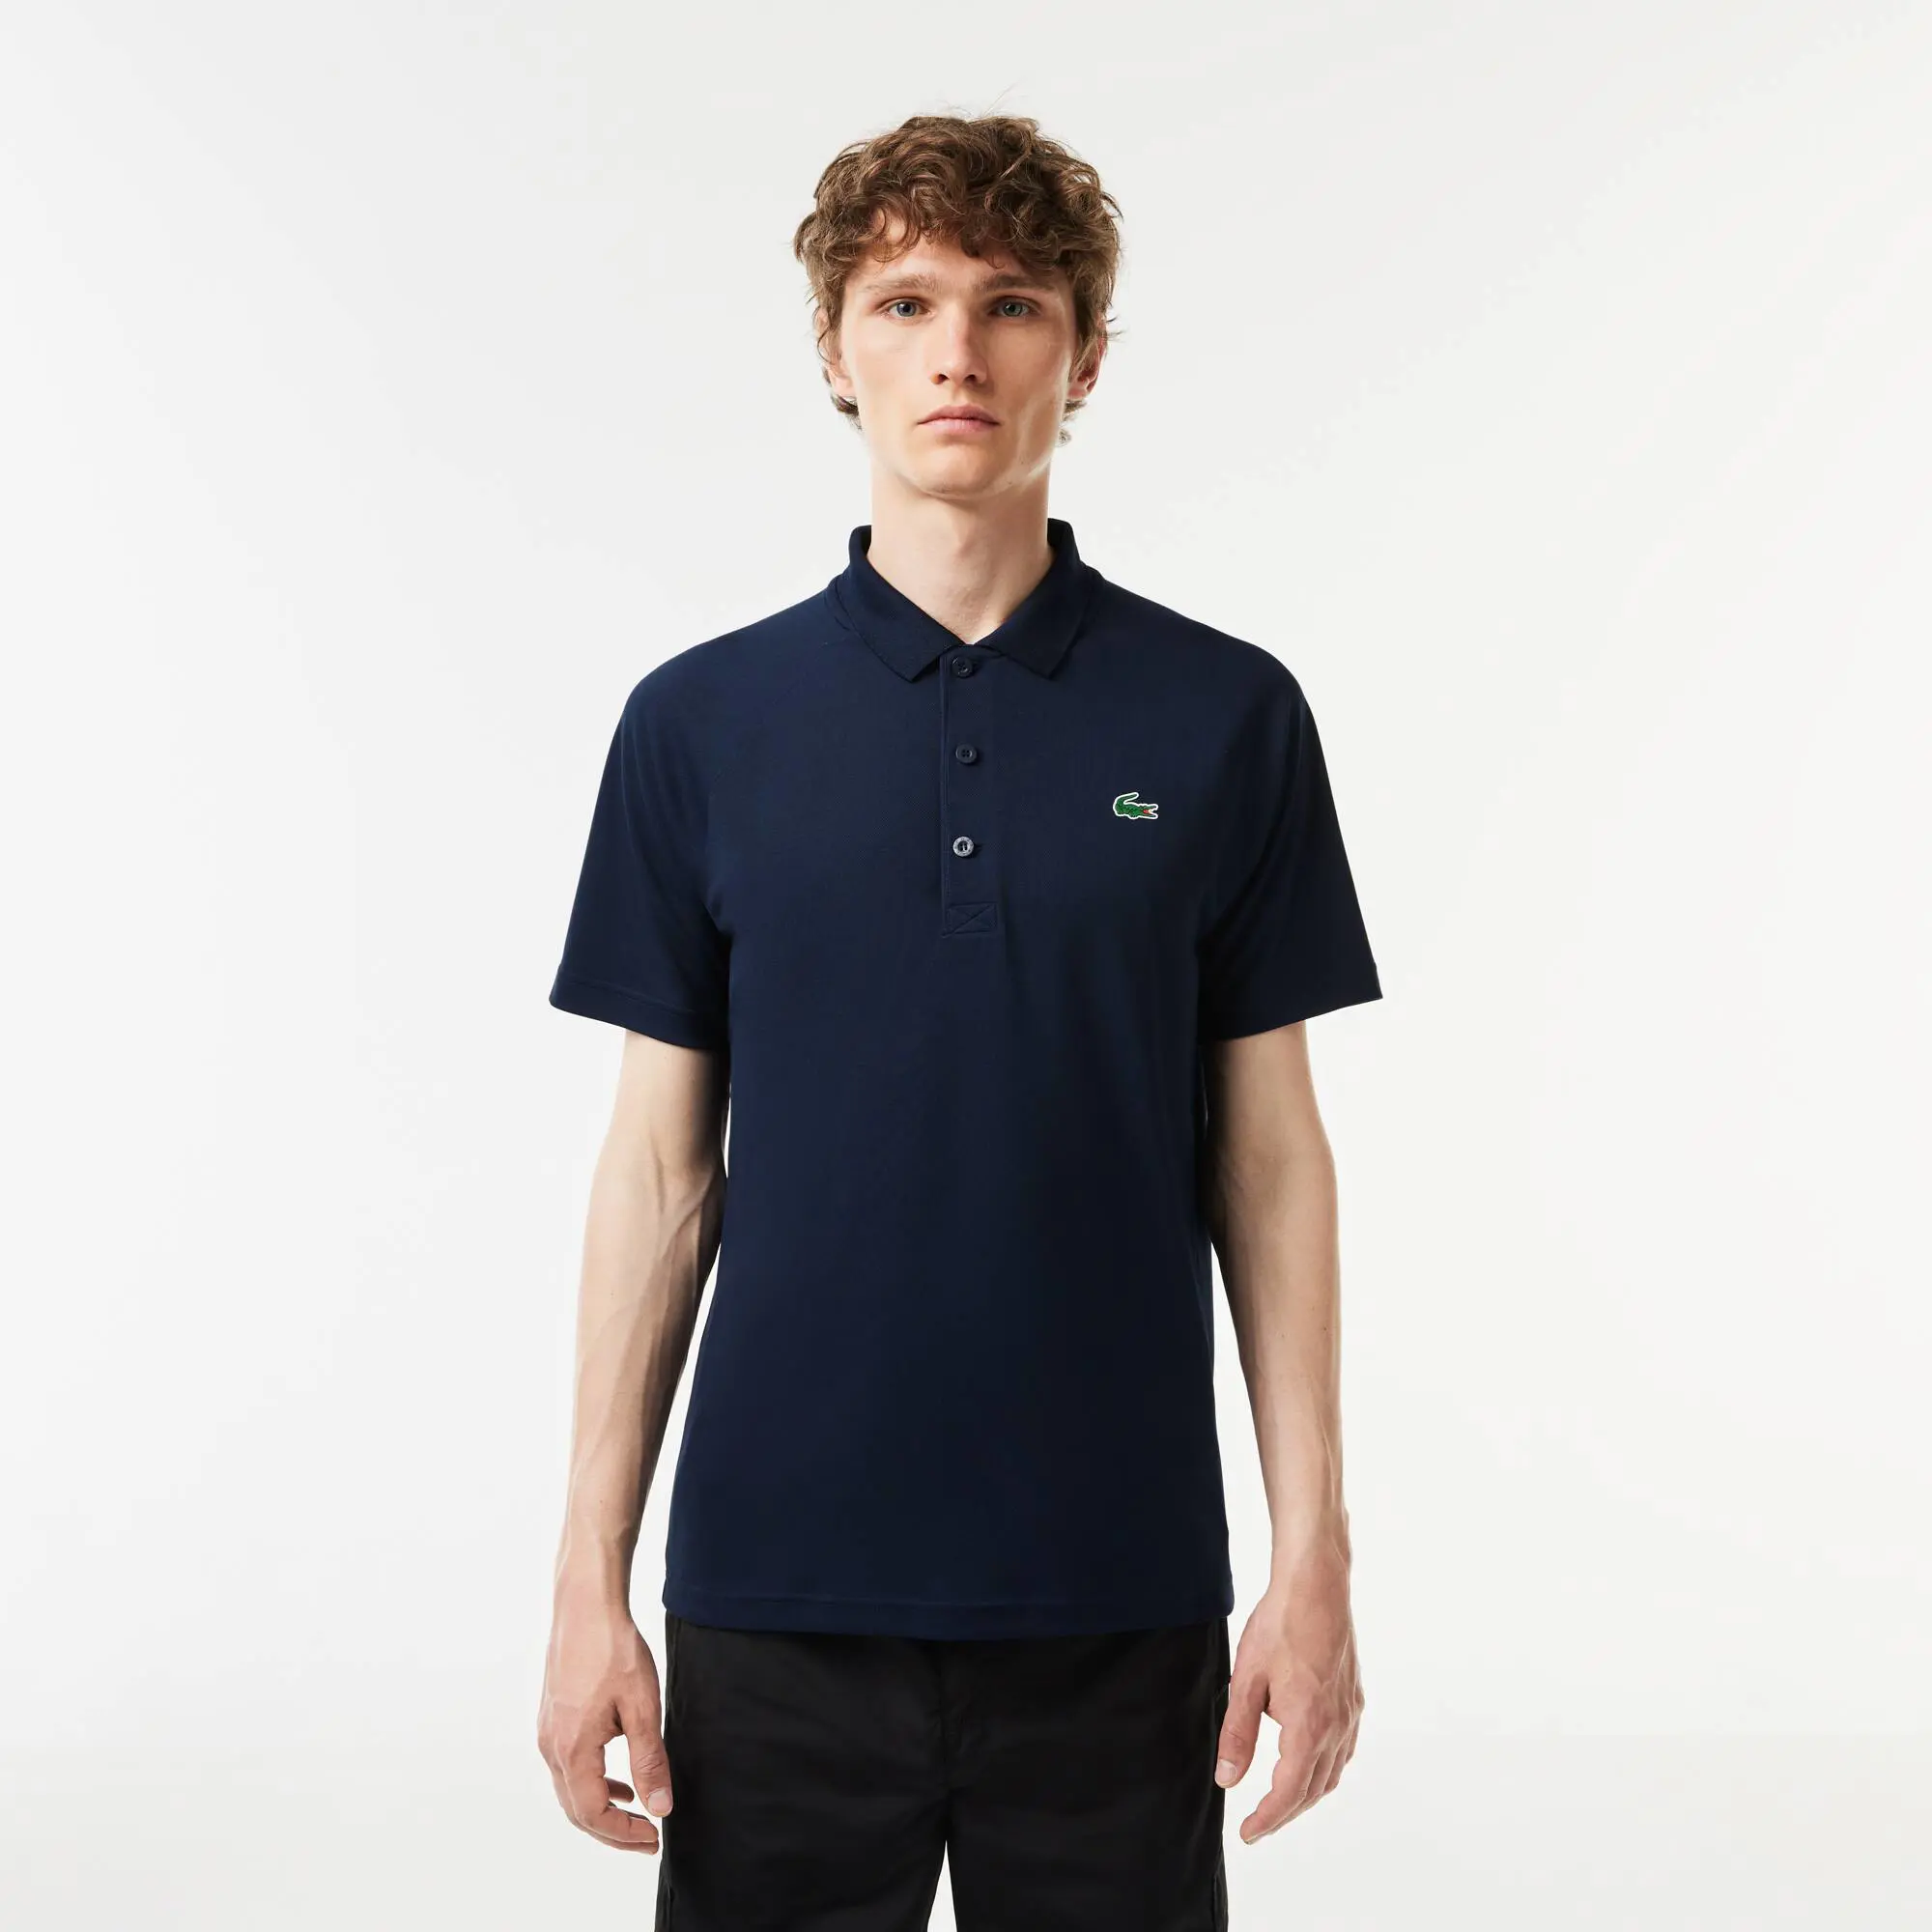 Lacoste Men's Lacoste SPORT Breathable Run-Resistant Interlock Polo Shirt. 1